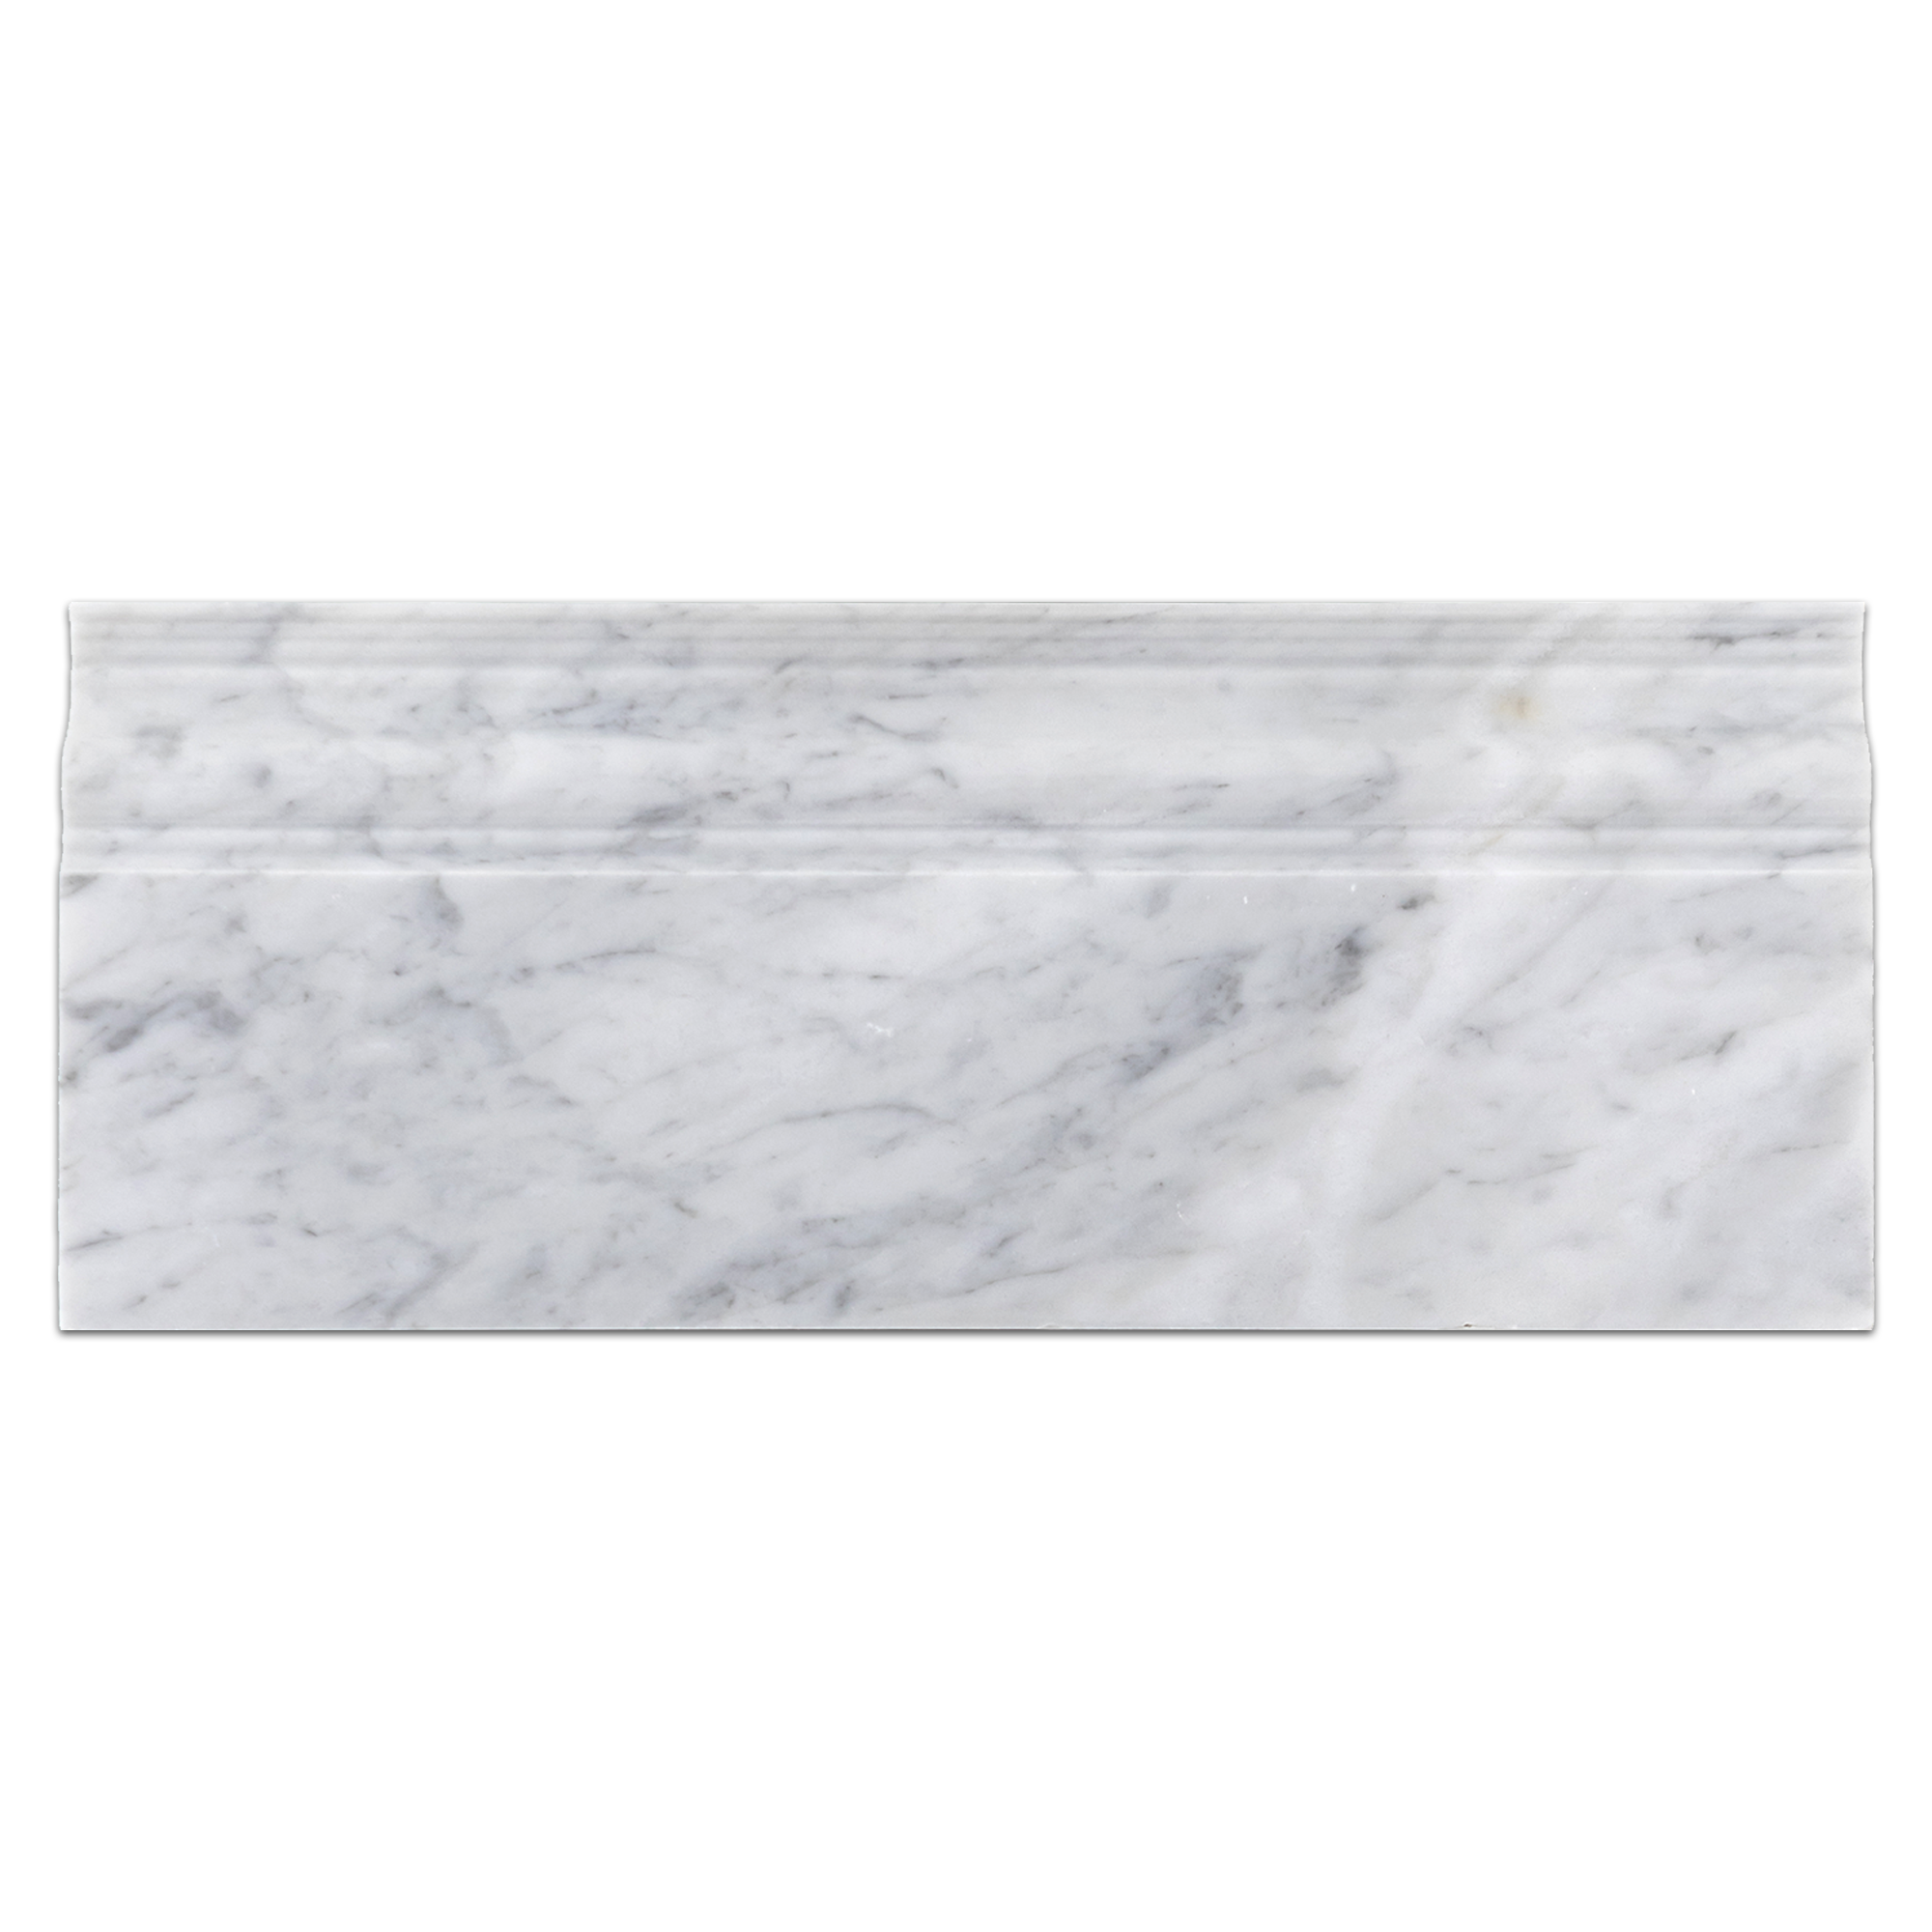 Elon Bianco Carrara polished marble baseboard tile 4.75x12 for elegant interior design.